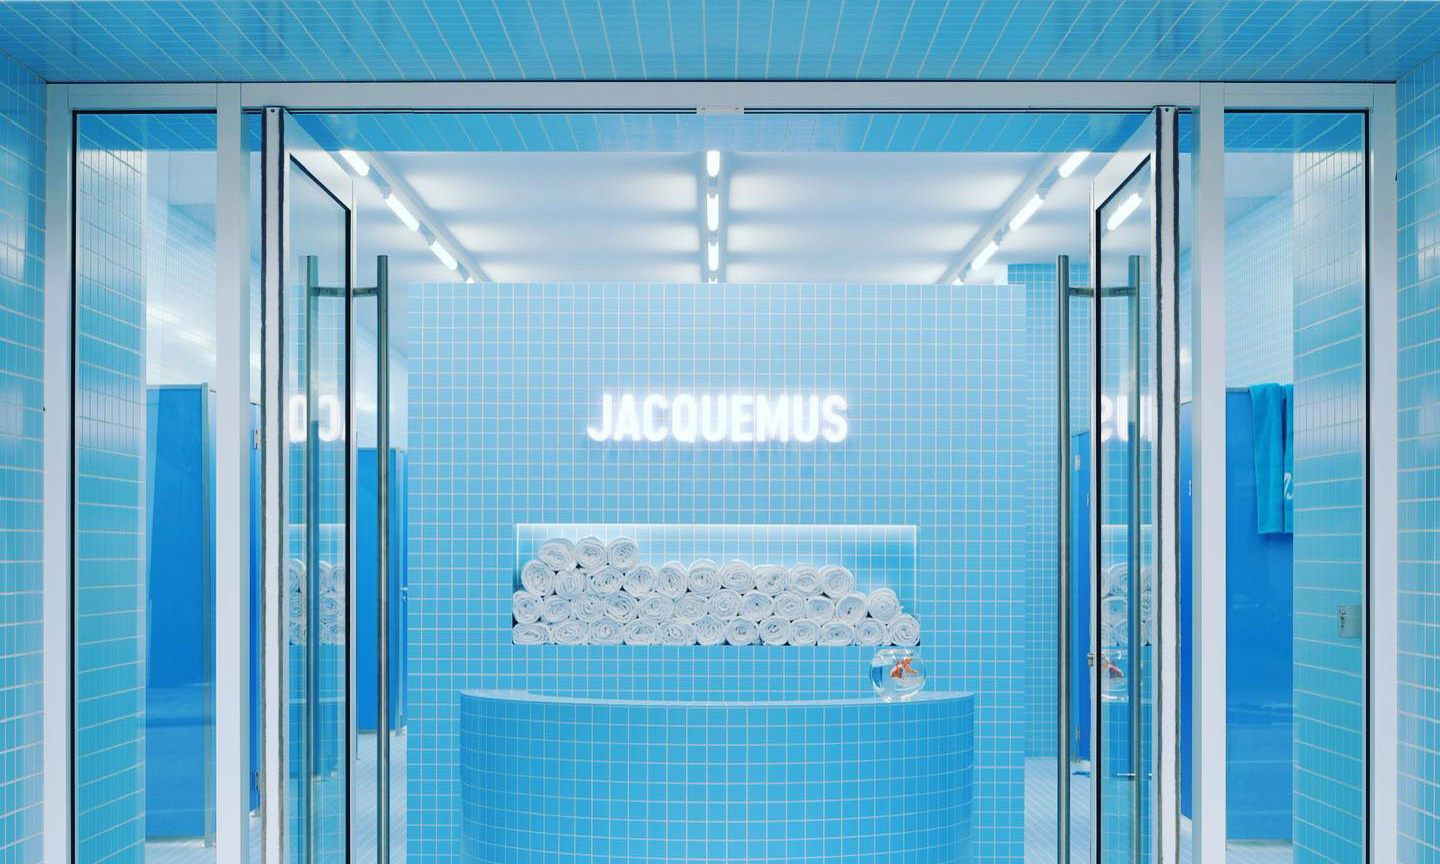 JACQUEMUS 于伦敦百货公司开设快闪店